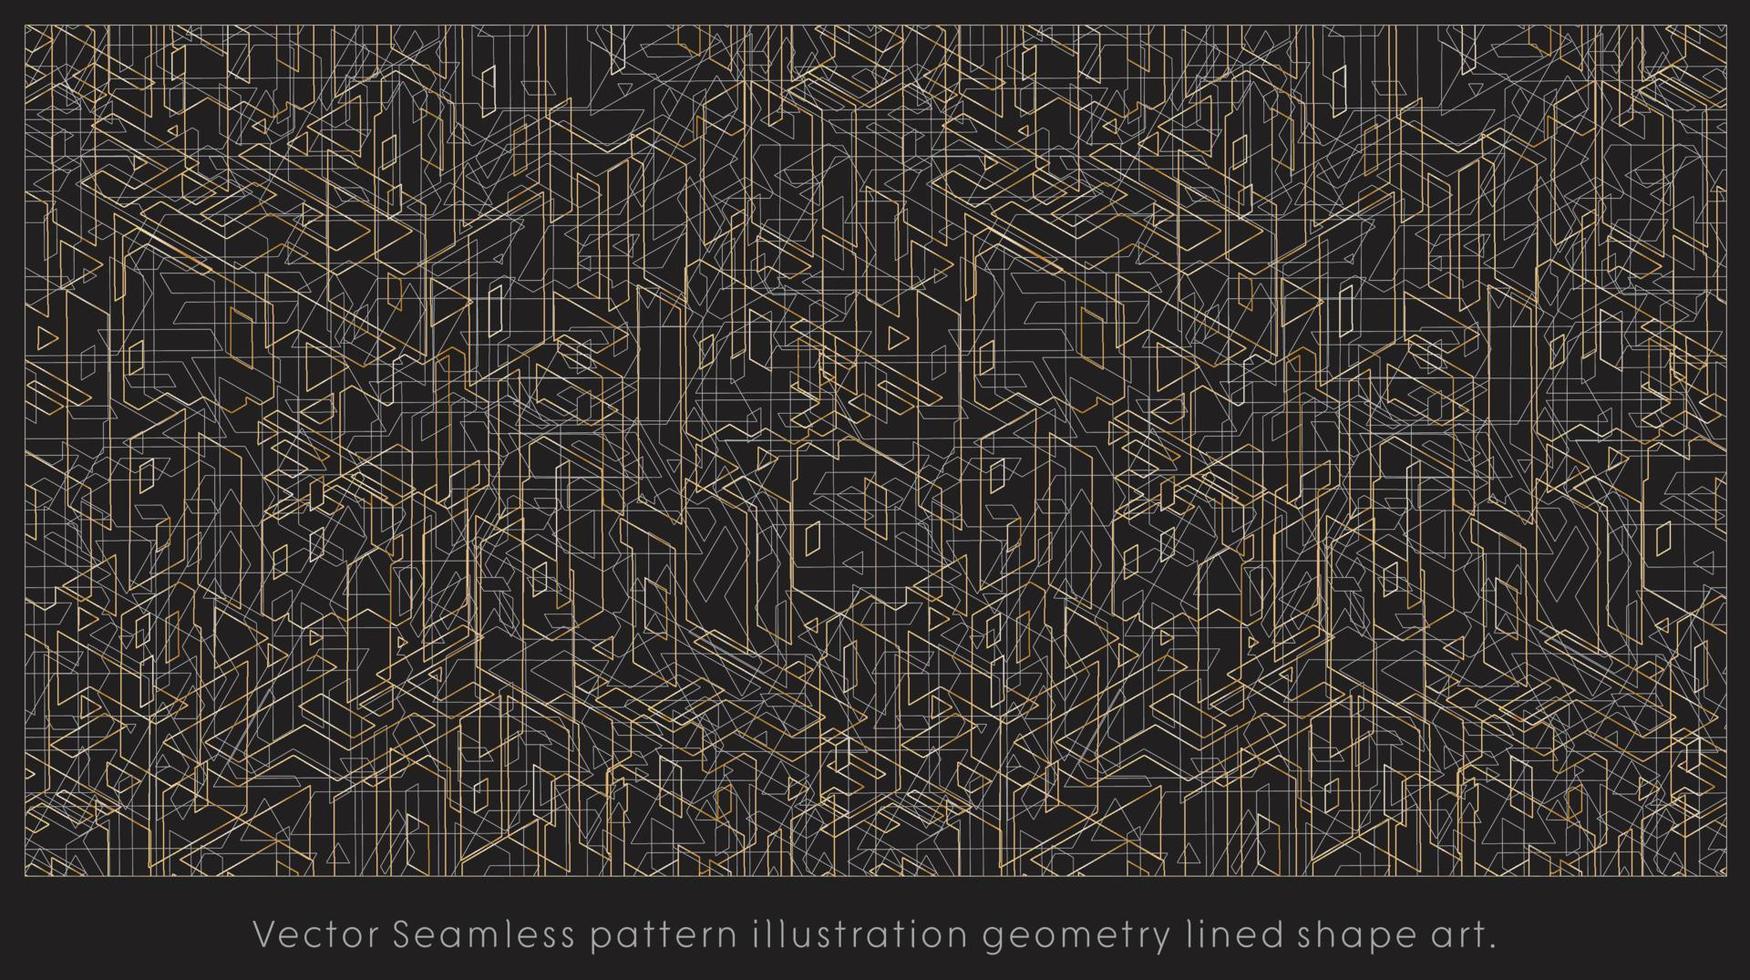 Vector Seamless pattern illustration geometry lined shape art